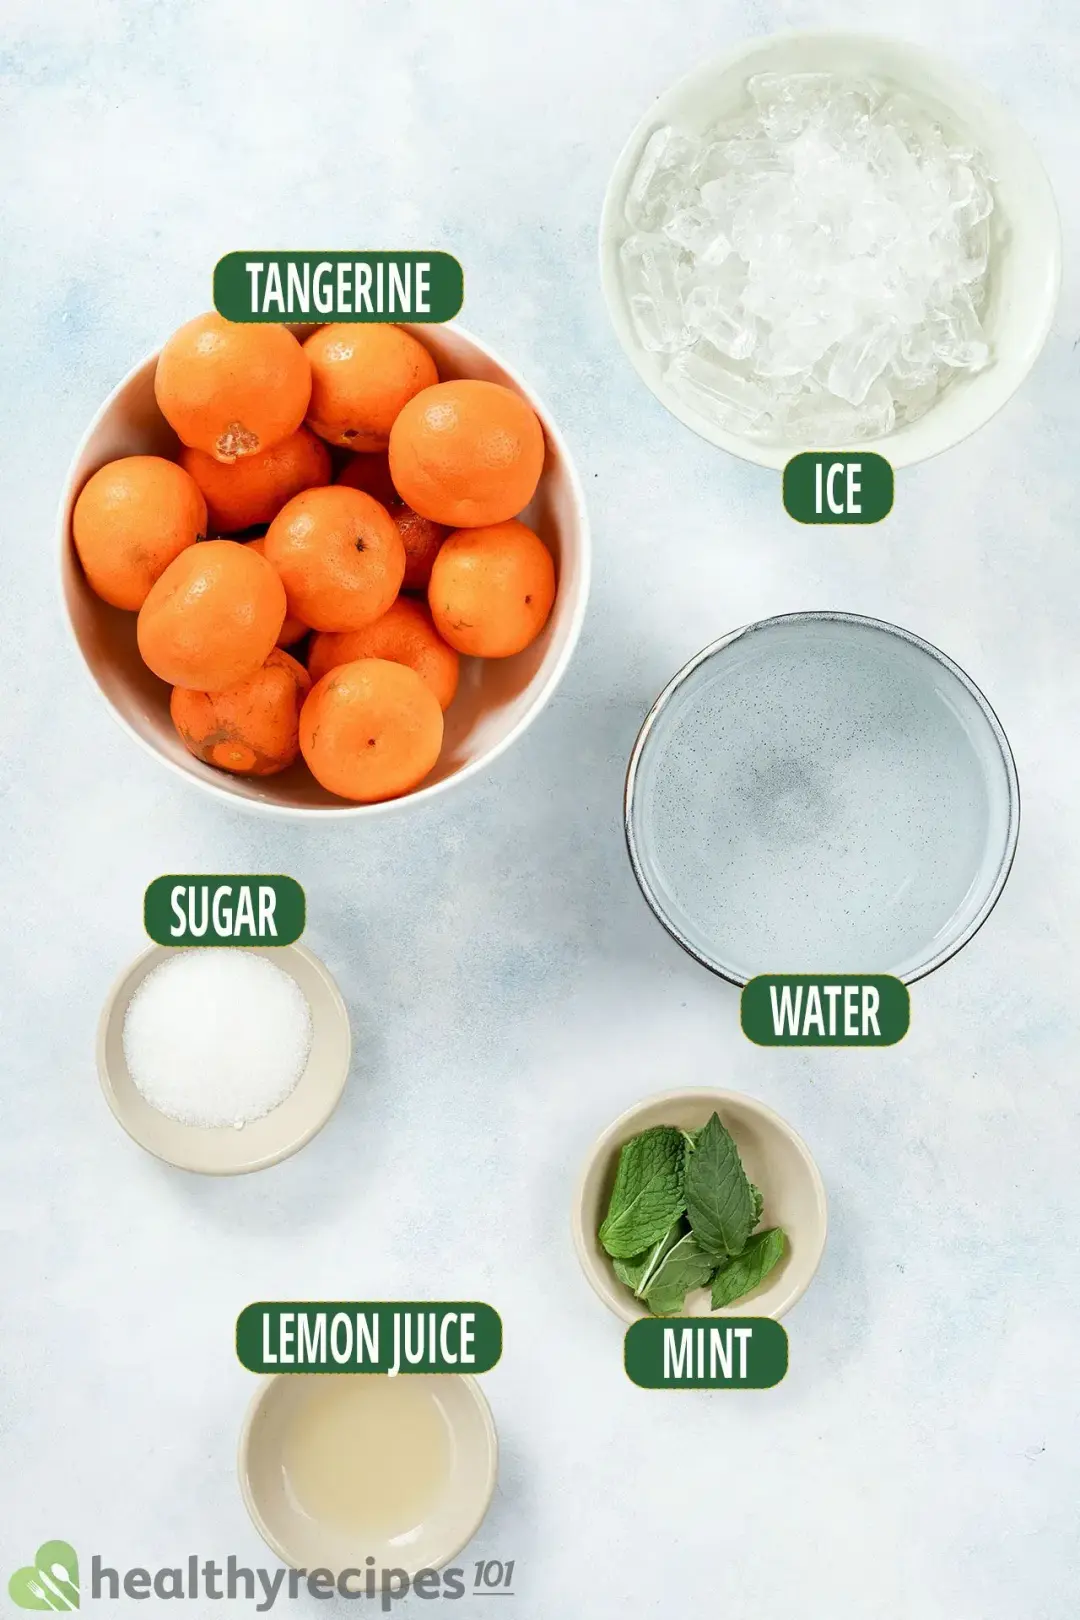 Ingredients for Tangerine Juice